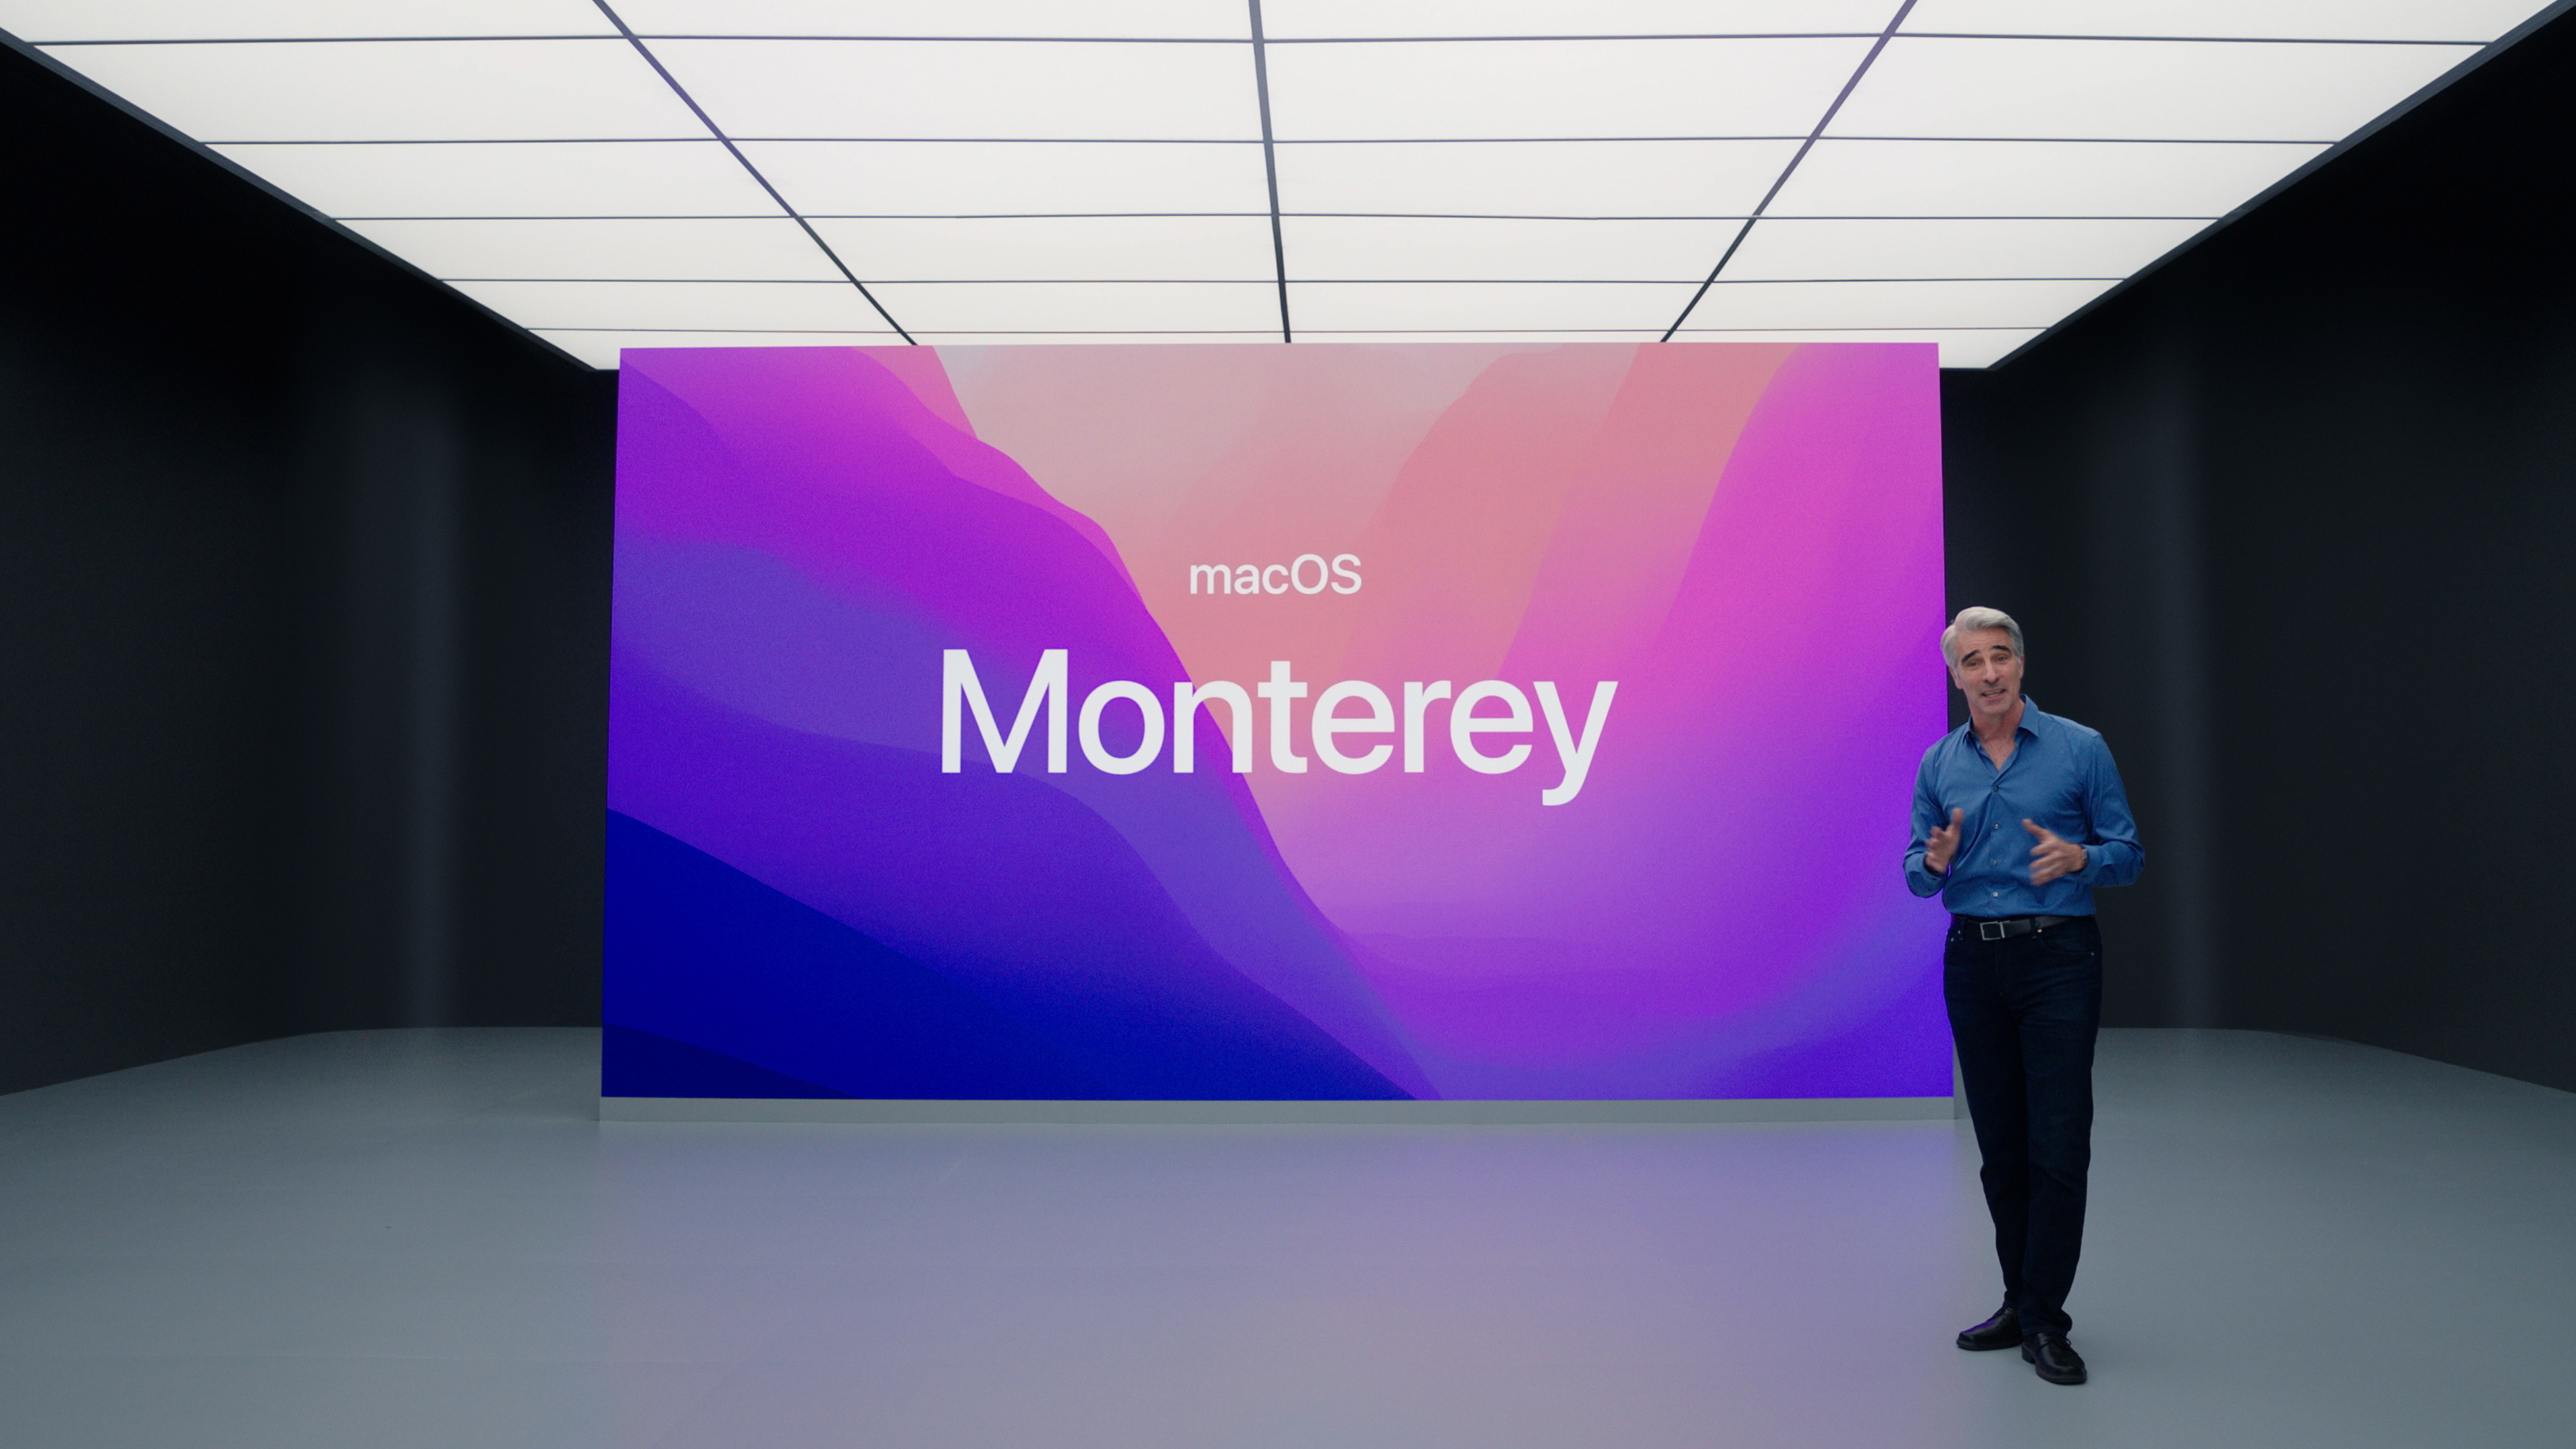 macOS 8 ديسمبر 2021 0 تعليق تأخرت ميزة macOS الرائعة Monterey و iPadOS